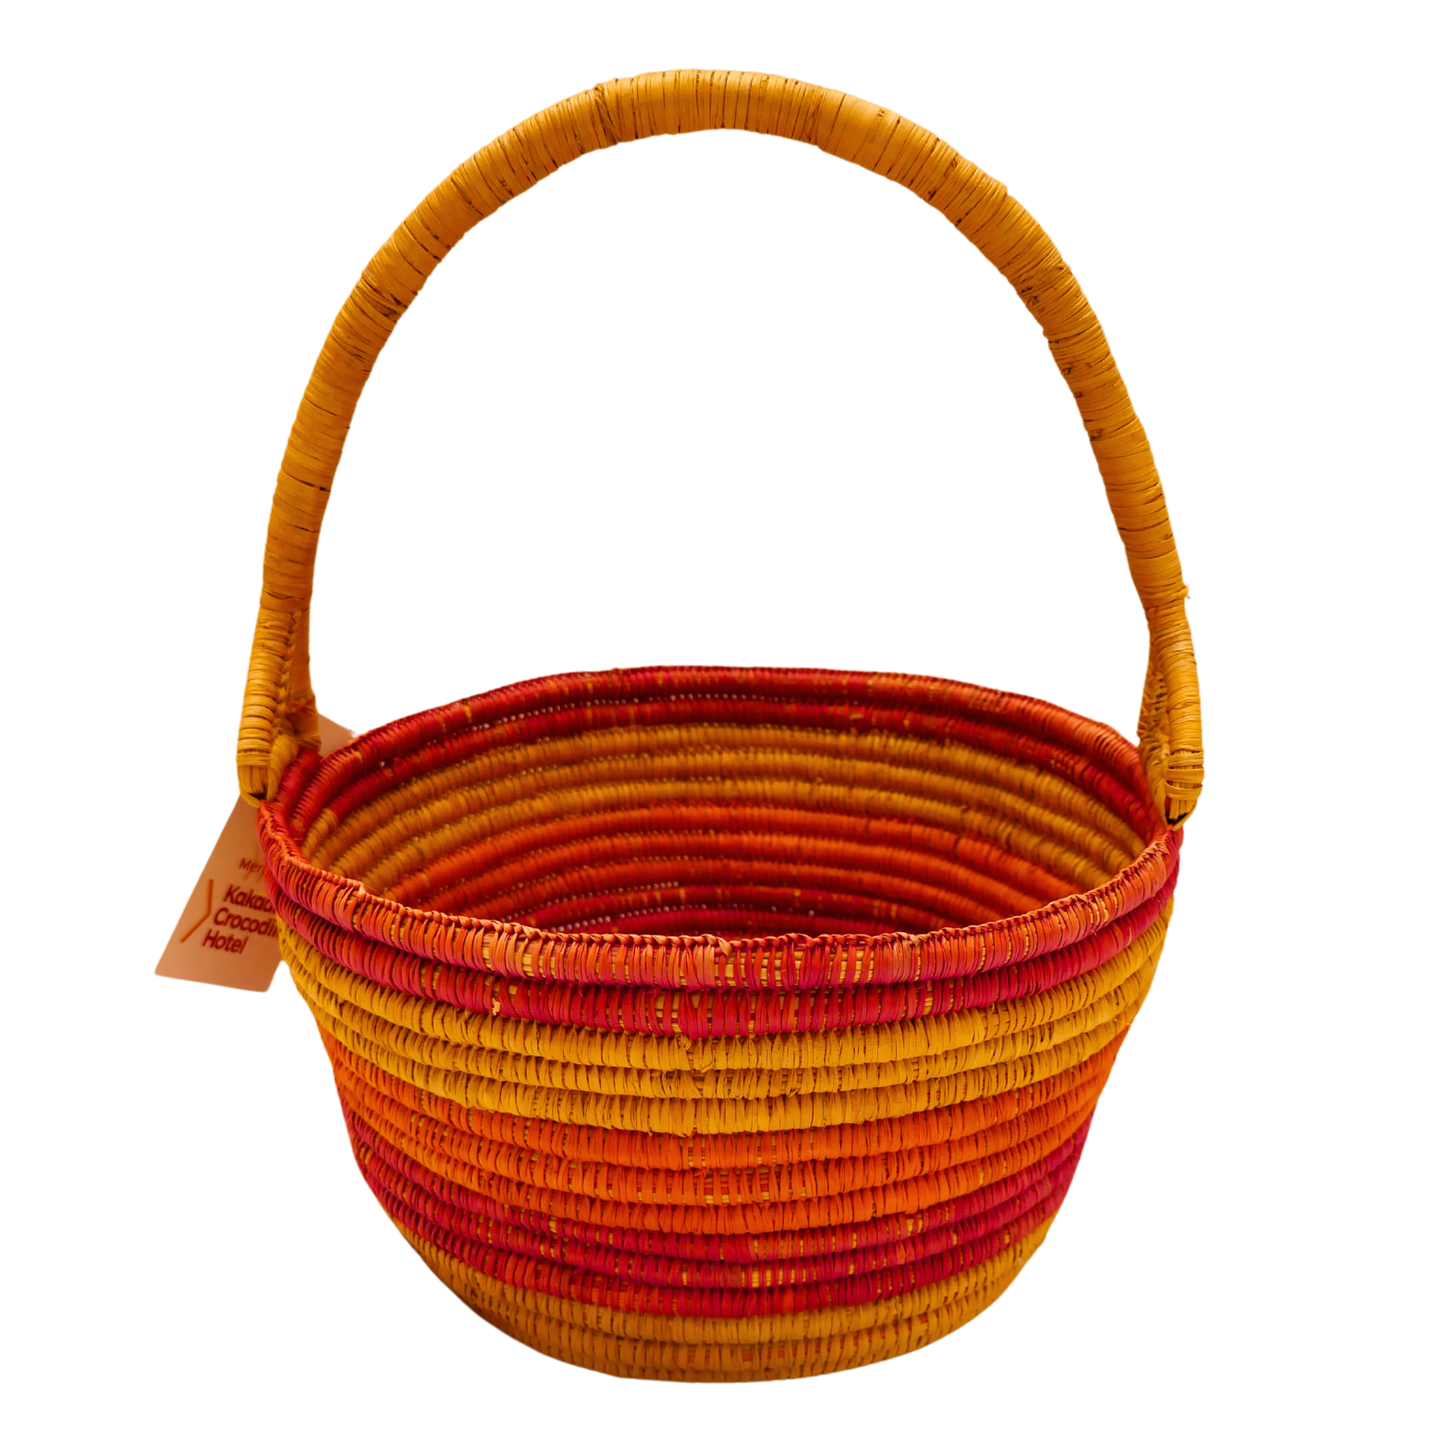 Woven Pandanus Basket by Injalak Arts